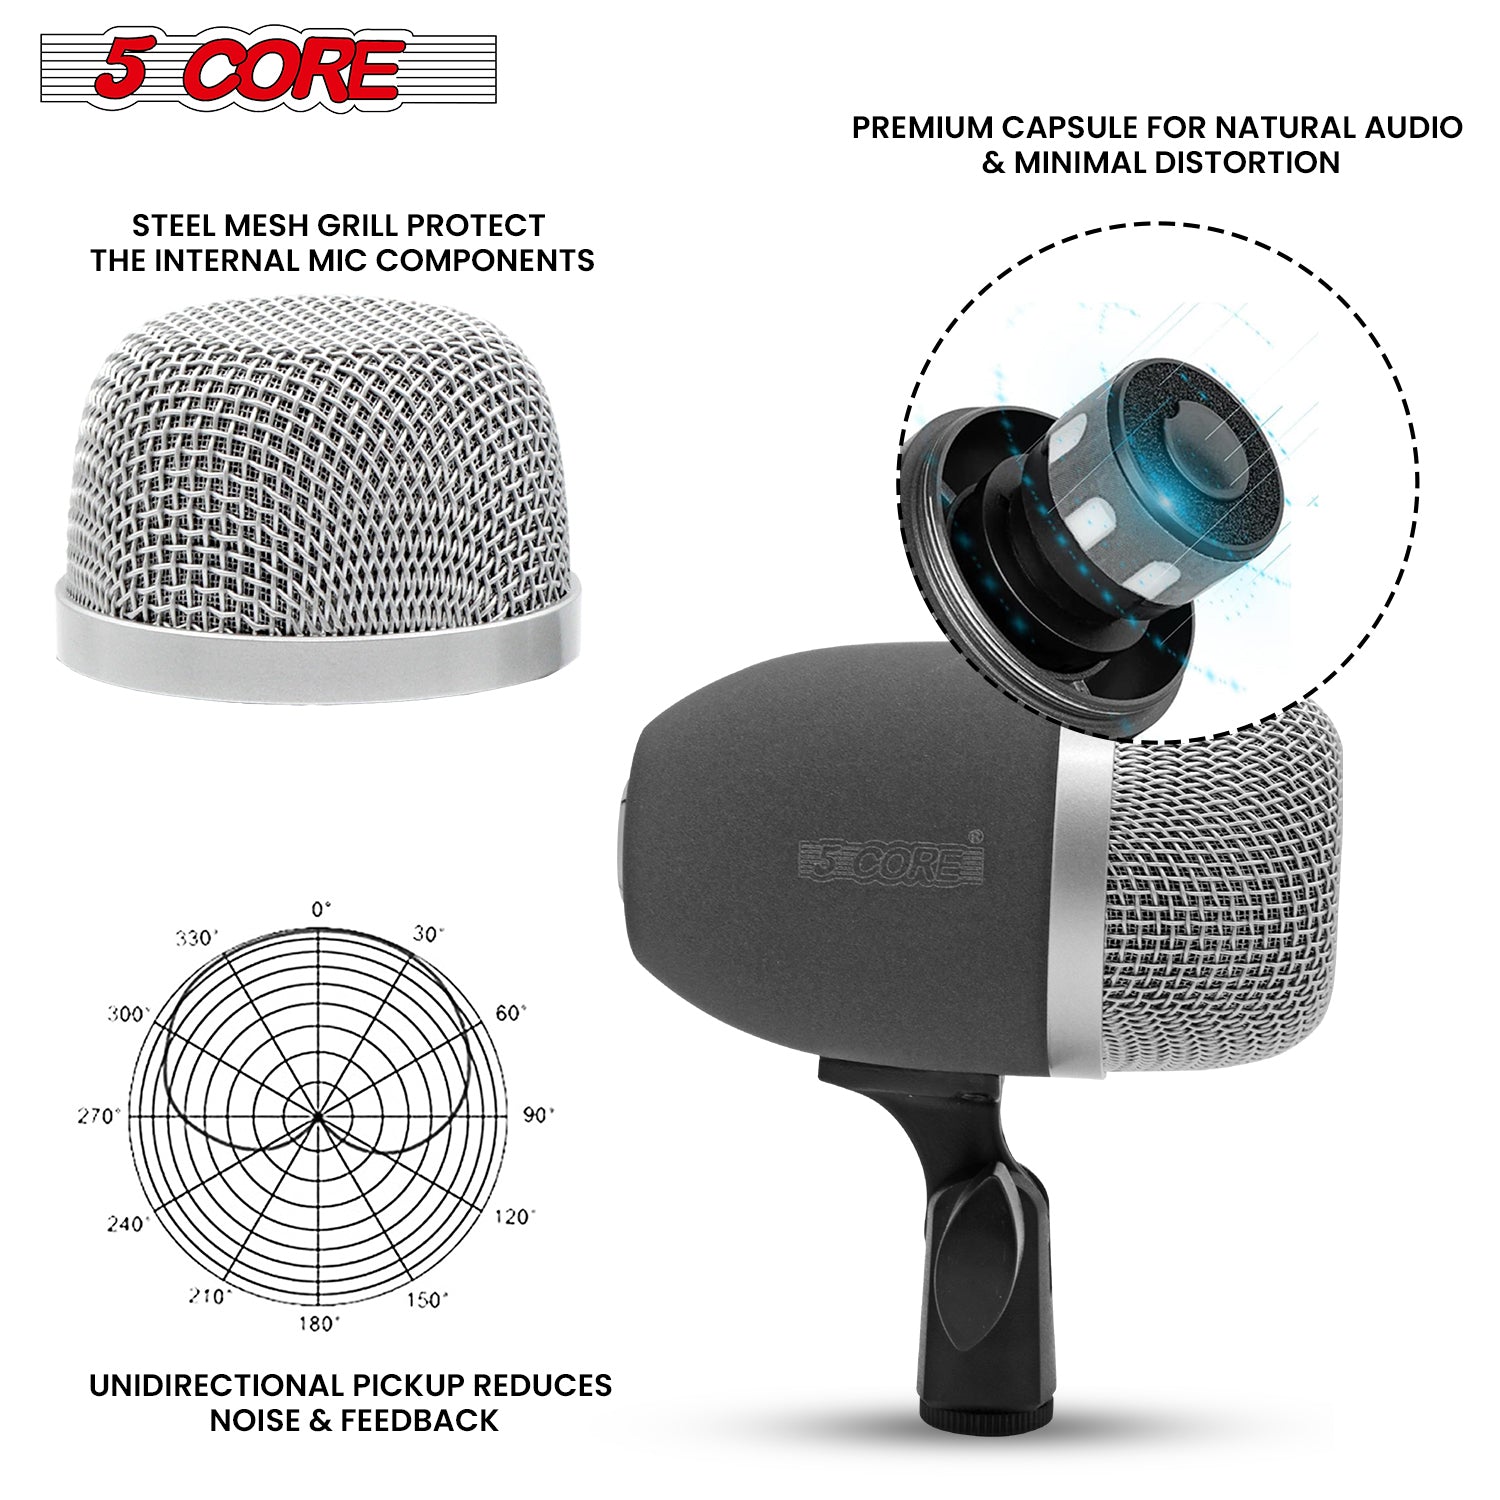 5 Core Tabla Microphone Set • Uni-Directional Bayan Dayan Instrument Mic w Balanced XLR Connection